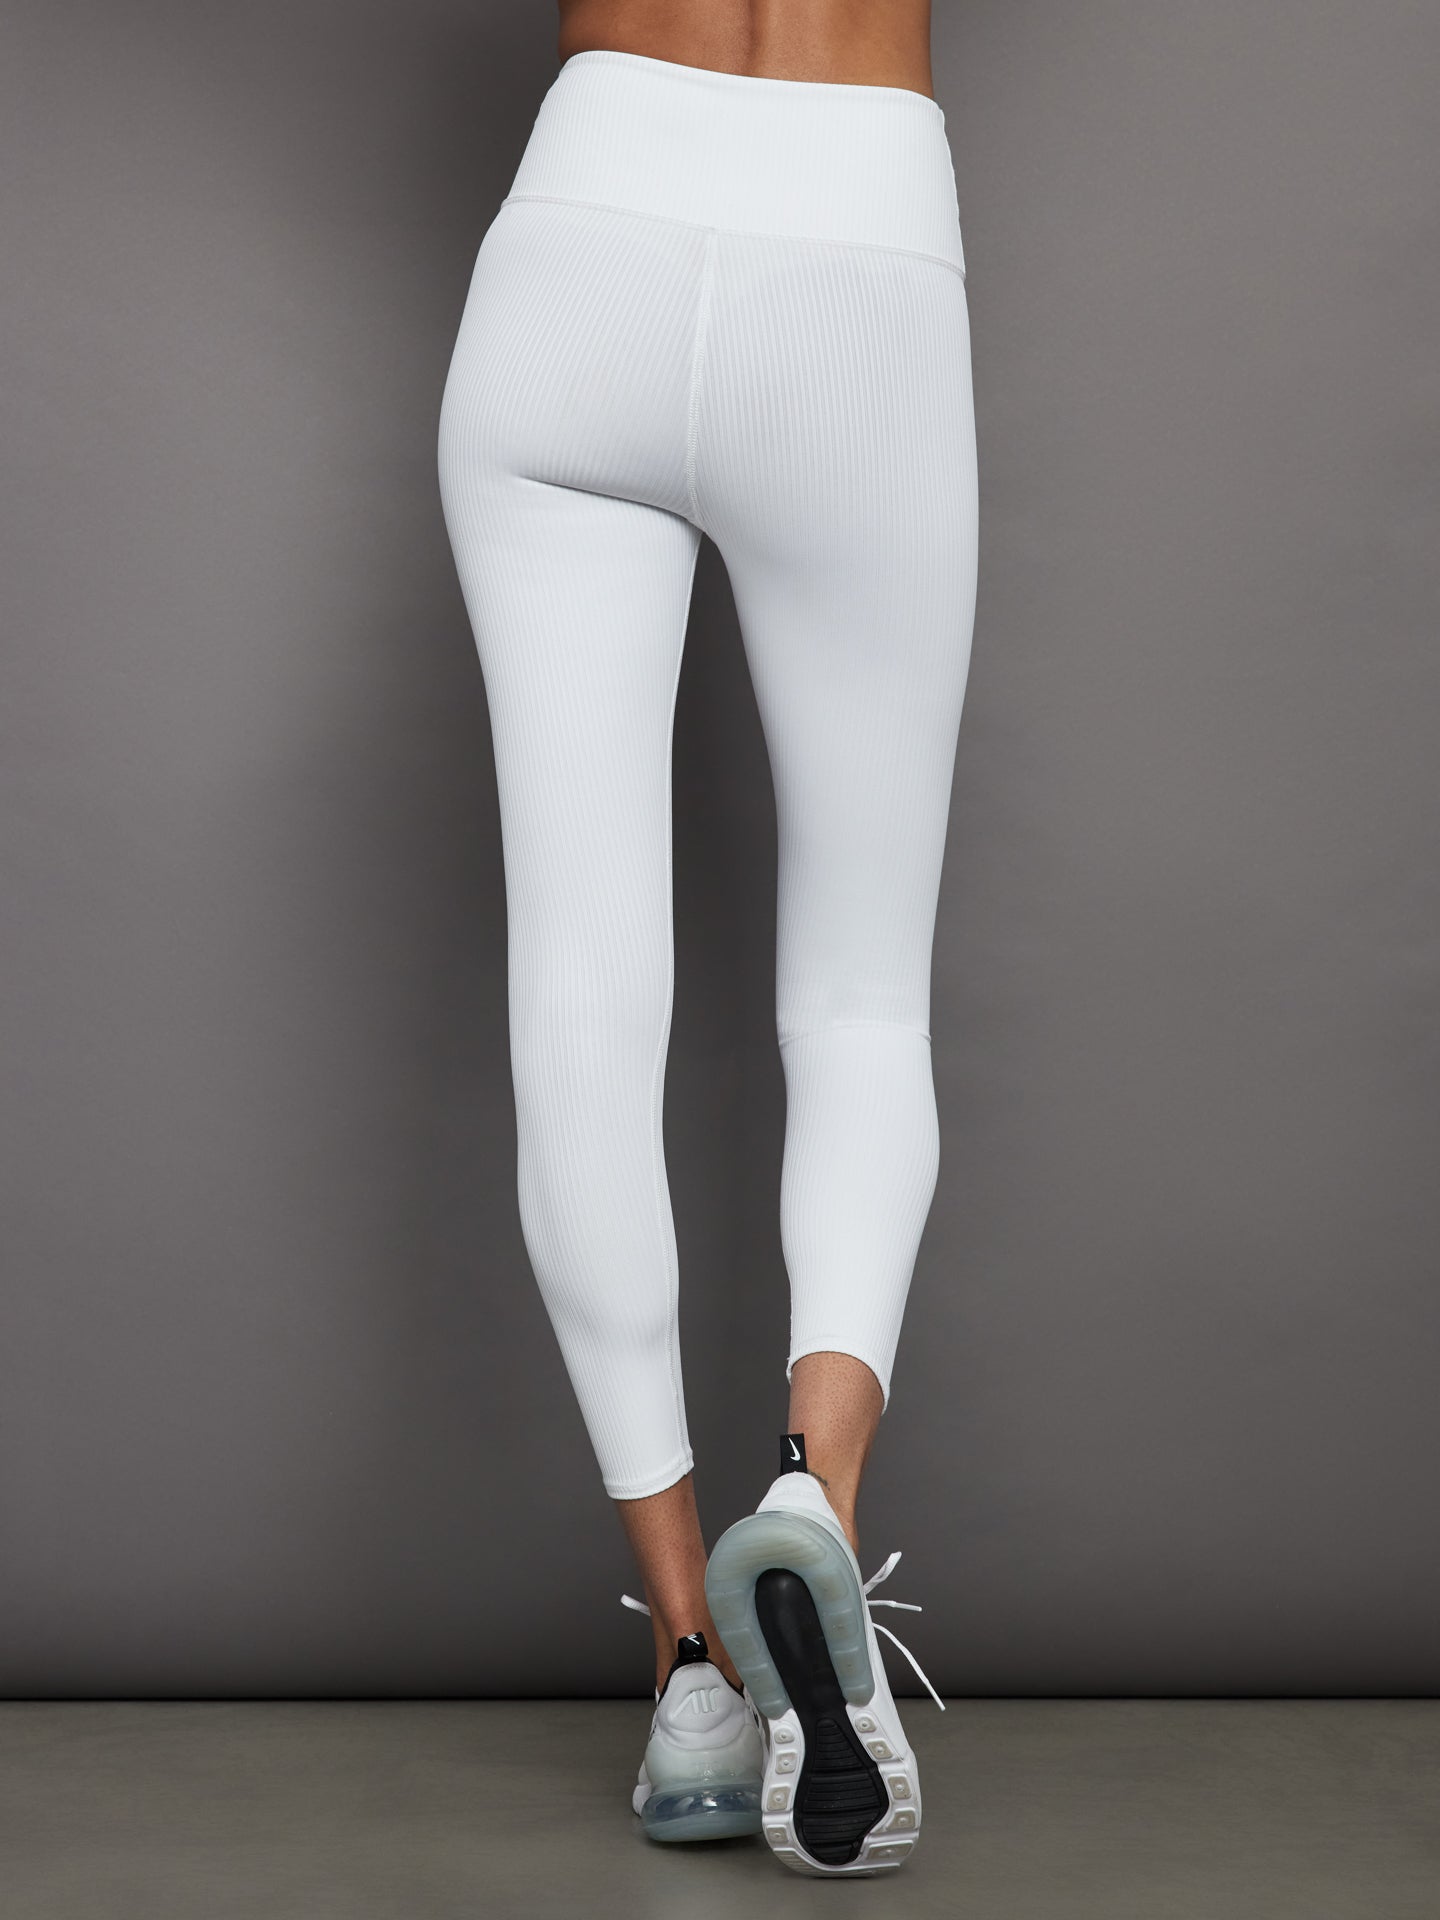 Yoga Pants Pockets Sportswear | Yoga Pants Pockets Women | Yoga Leggings  Women Pocket - Yoga Pants - Aliexpress